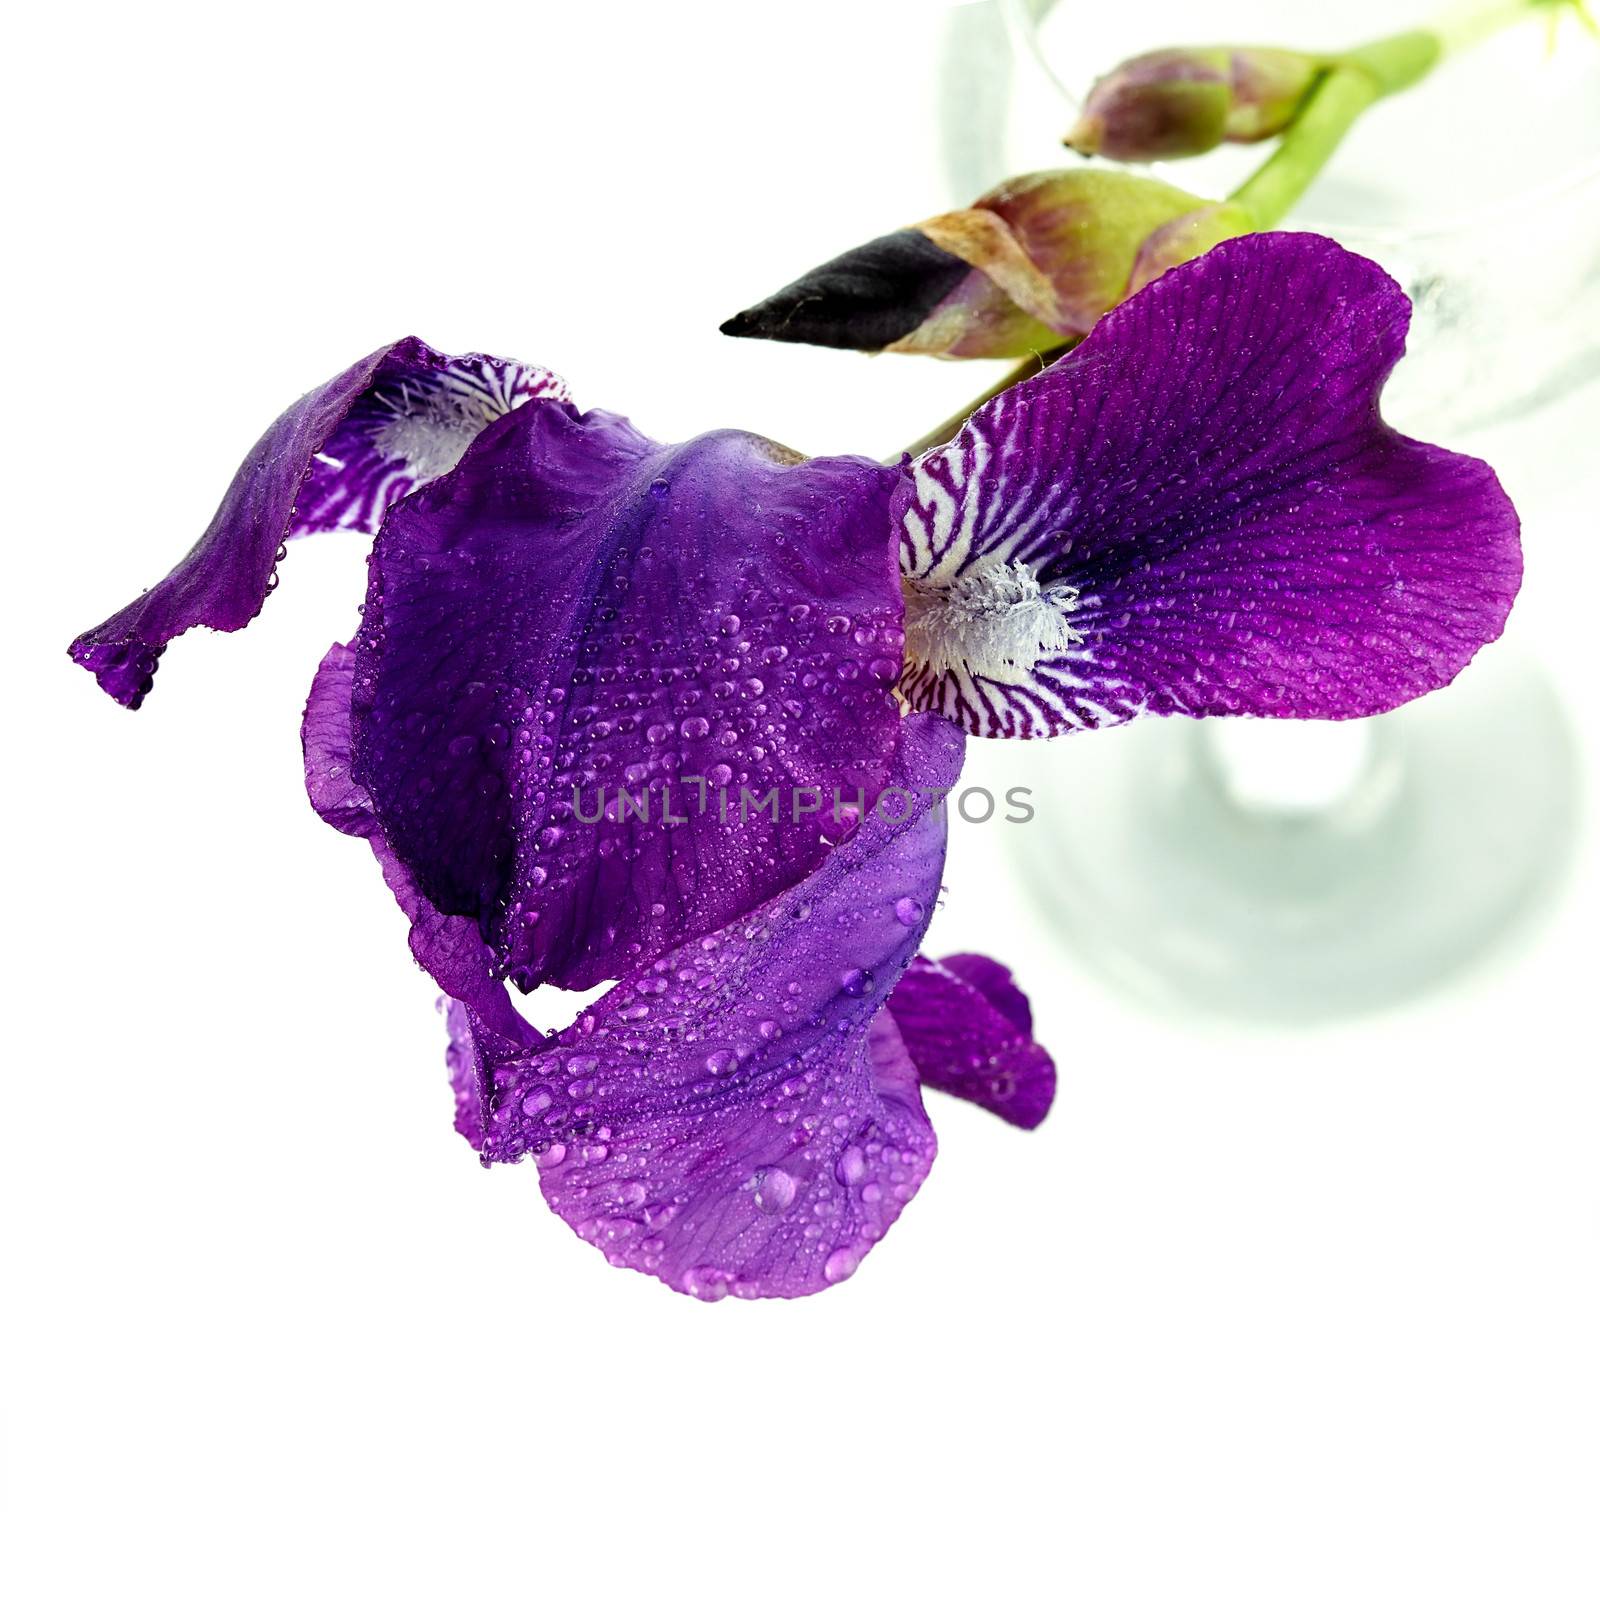 Violet flower. Iris flower in a glass. Violet iris. Flower in a glass. Flower in dew drops.